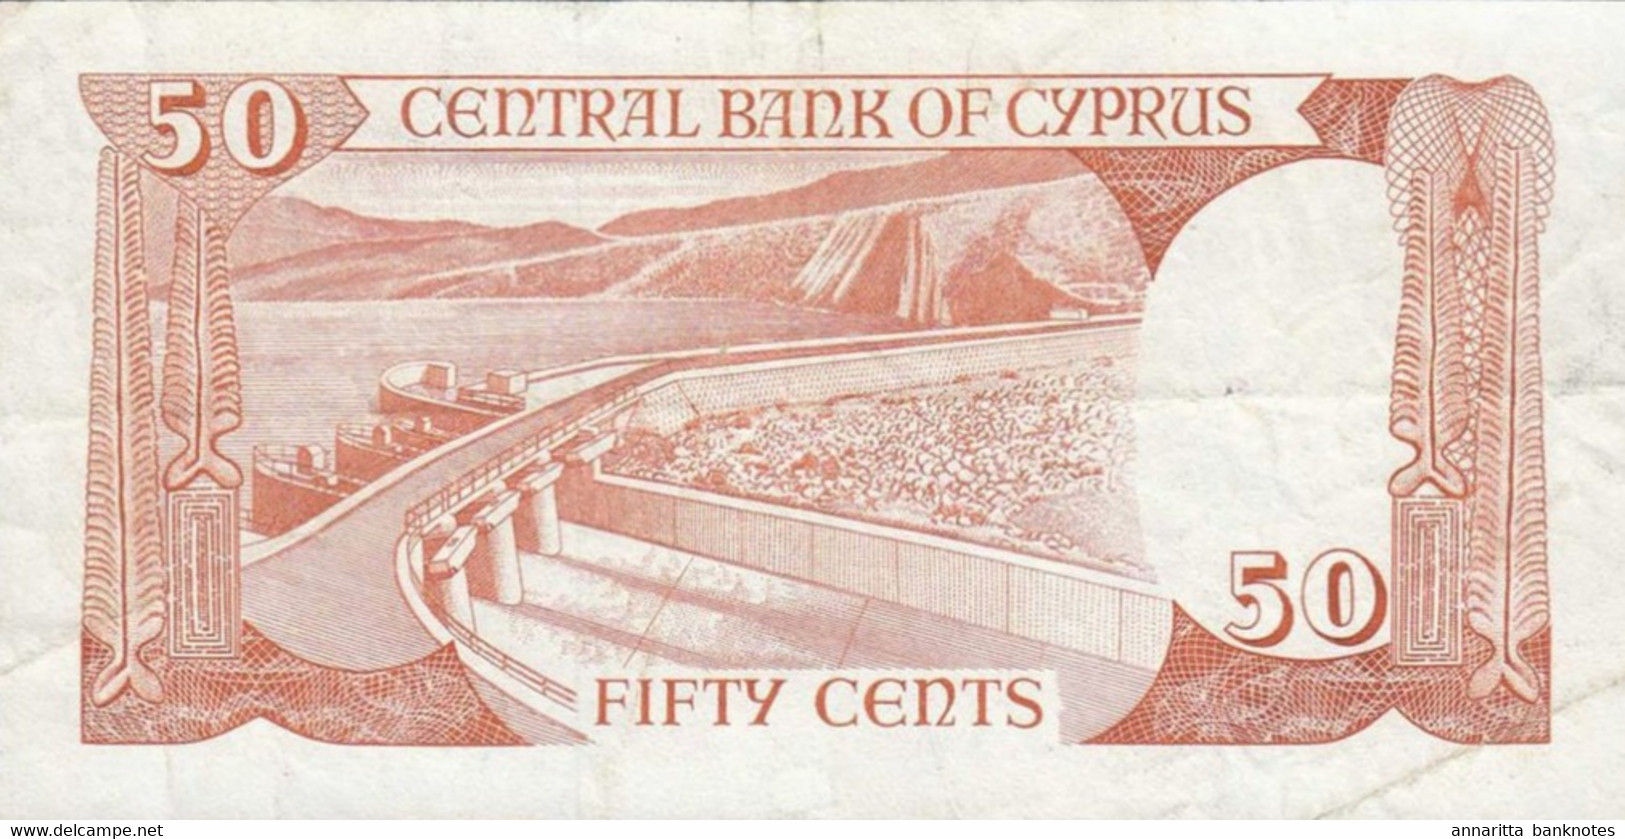 Cyprus 50 Cents 1989, S/N P324890 VF, P-52a, CY B311c - Chypre